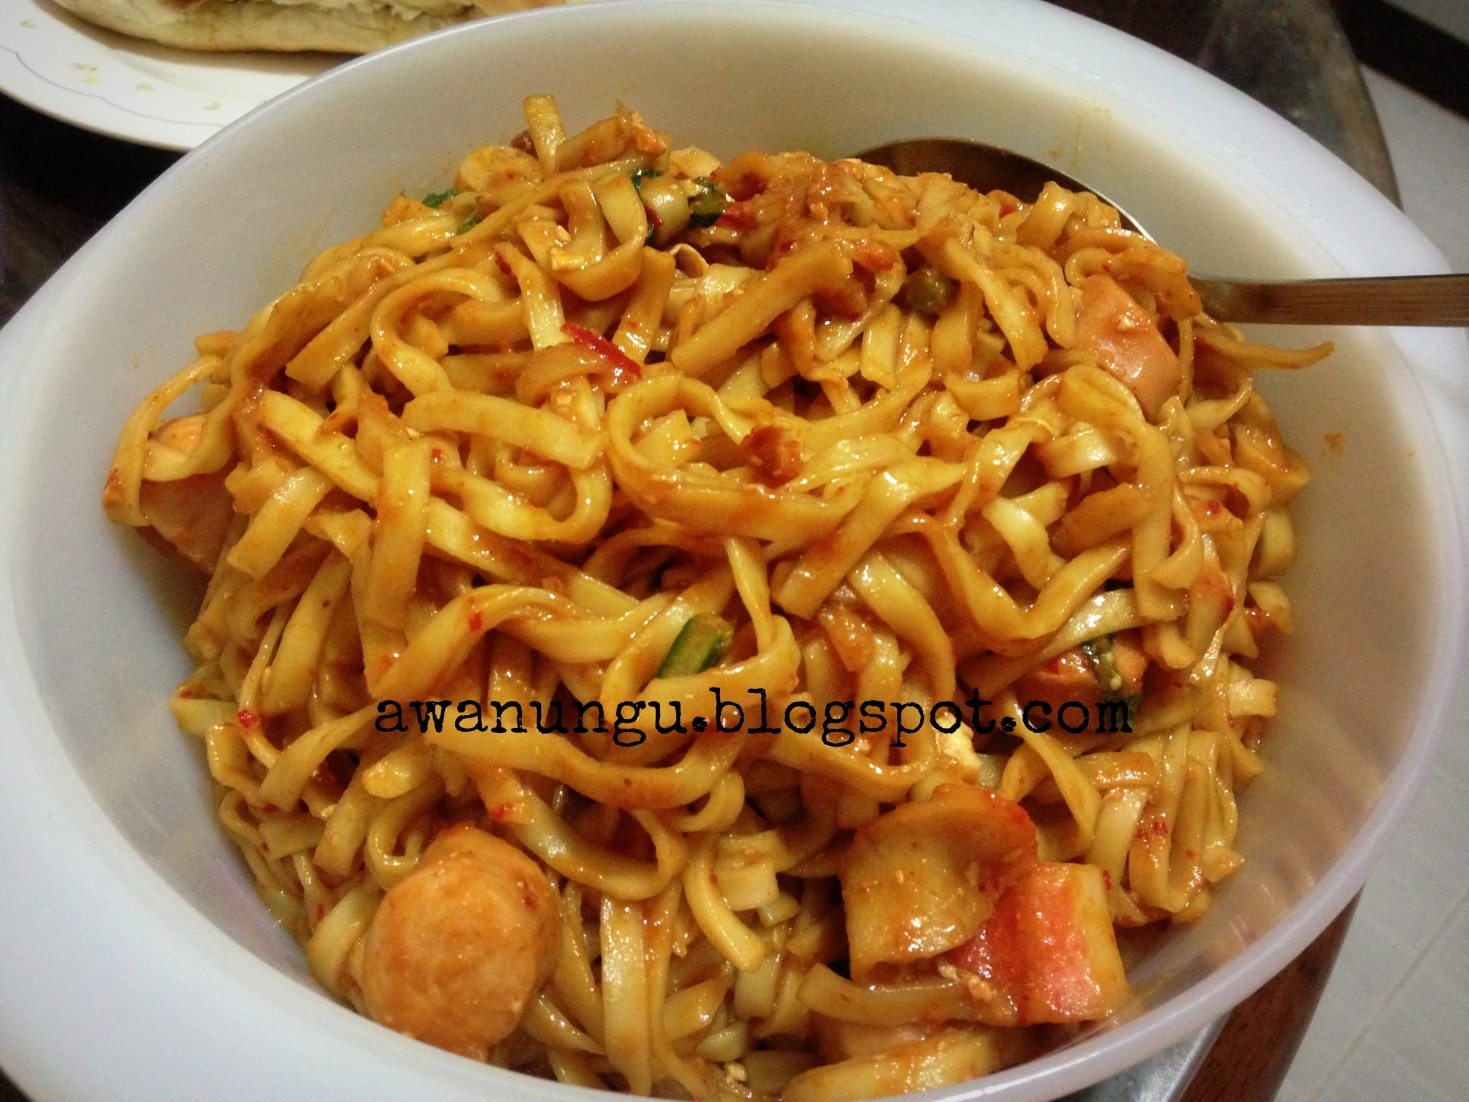 Makan-Makan: Mee Goreng, Spaghetti Goreng dan sewaktu 